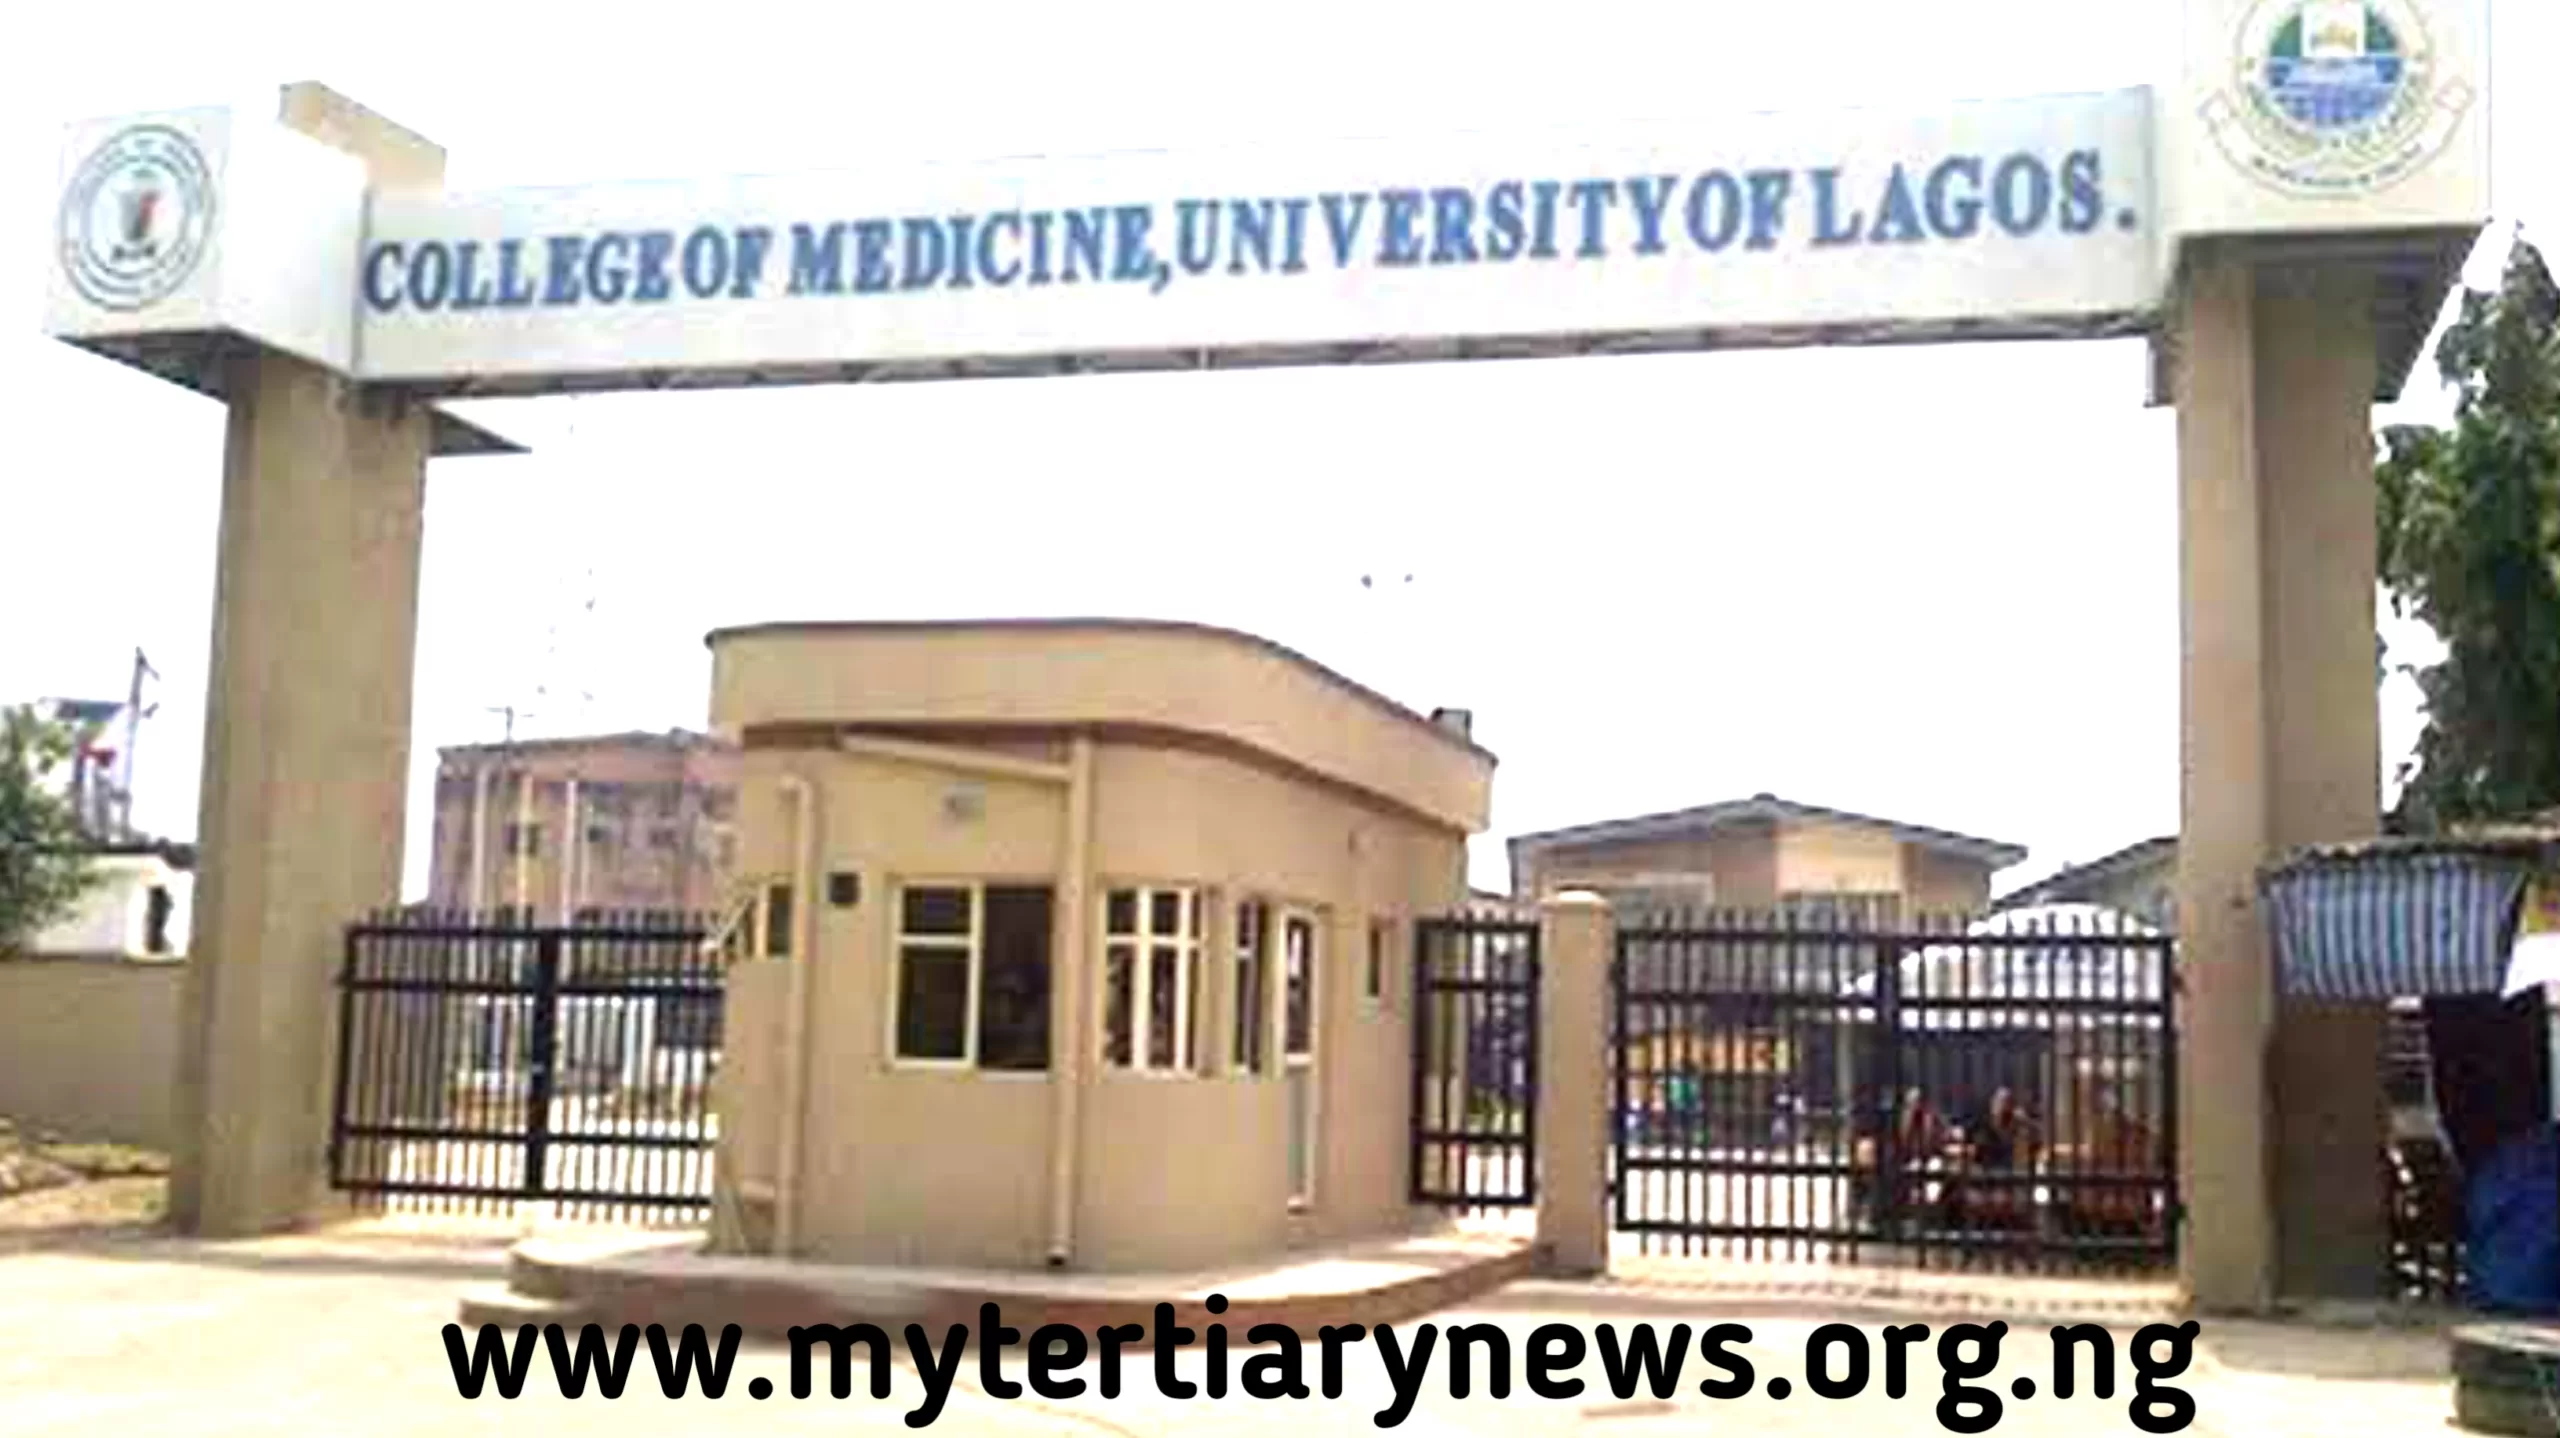 UNILAG College of Medicine Image || UNILAG Cut Off Mark for Medicine and Surgery